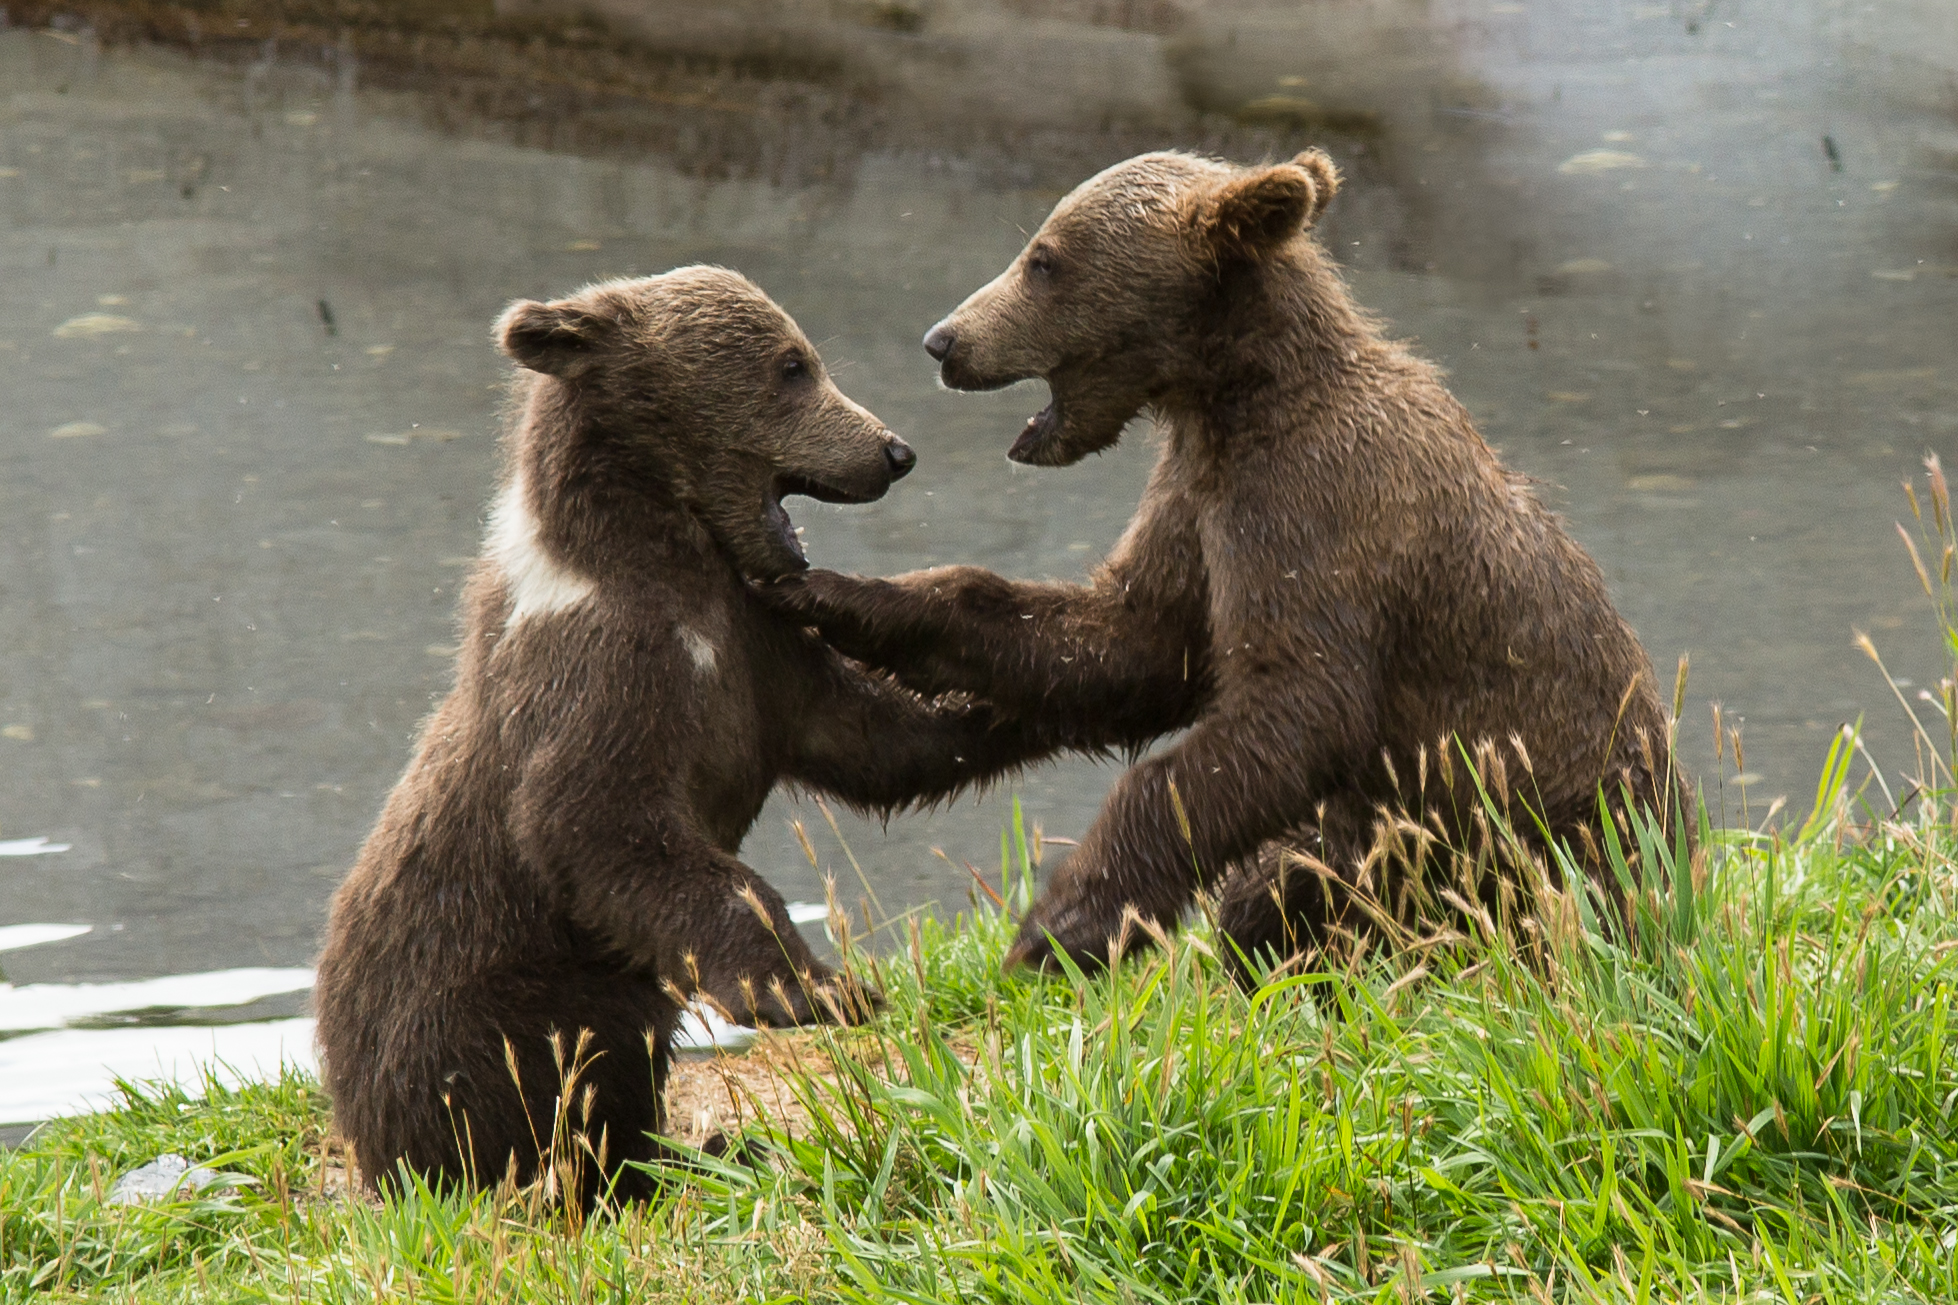 File:Kodiak brown bears FWS 18385.jpg - Wikimedia Commons